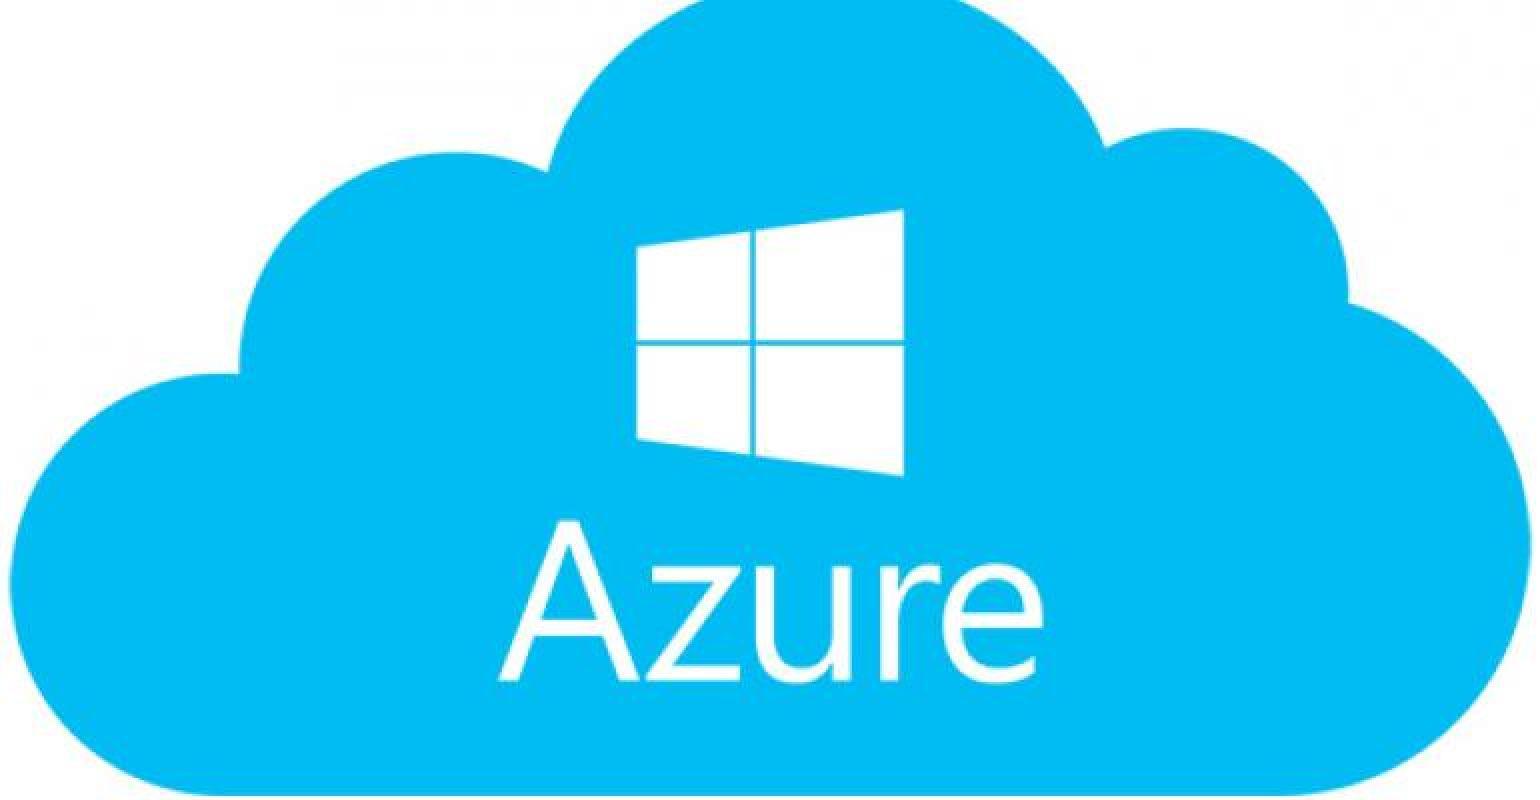 4 Weeks Microsoft Azure training for Beginners in Albany | Microsoft Azure Fundamentals | Azure cloud computing training | Microsoft Azure Fundamentals AZ-900 Certification Exam Prep (Preparation) Training Course